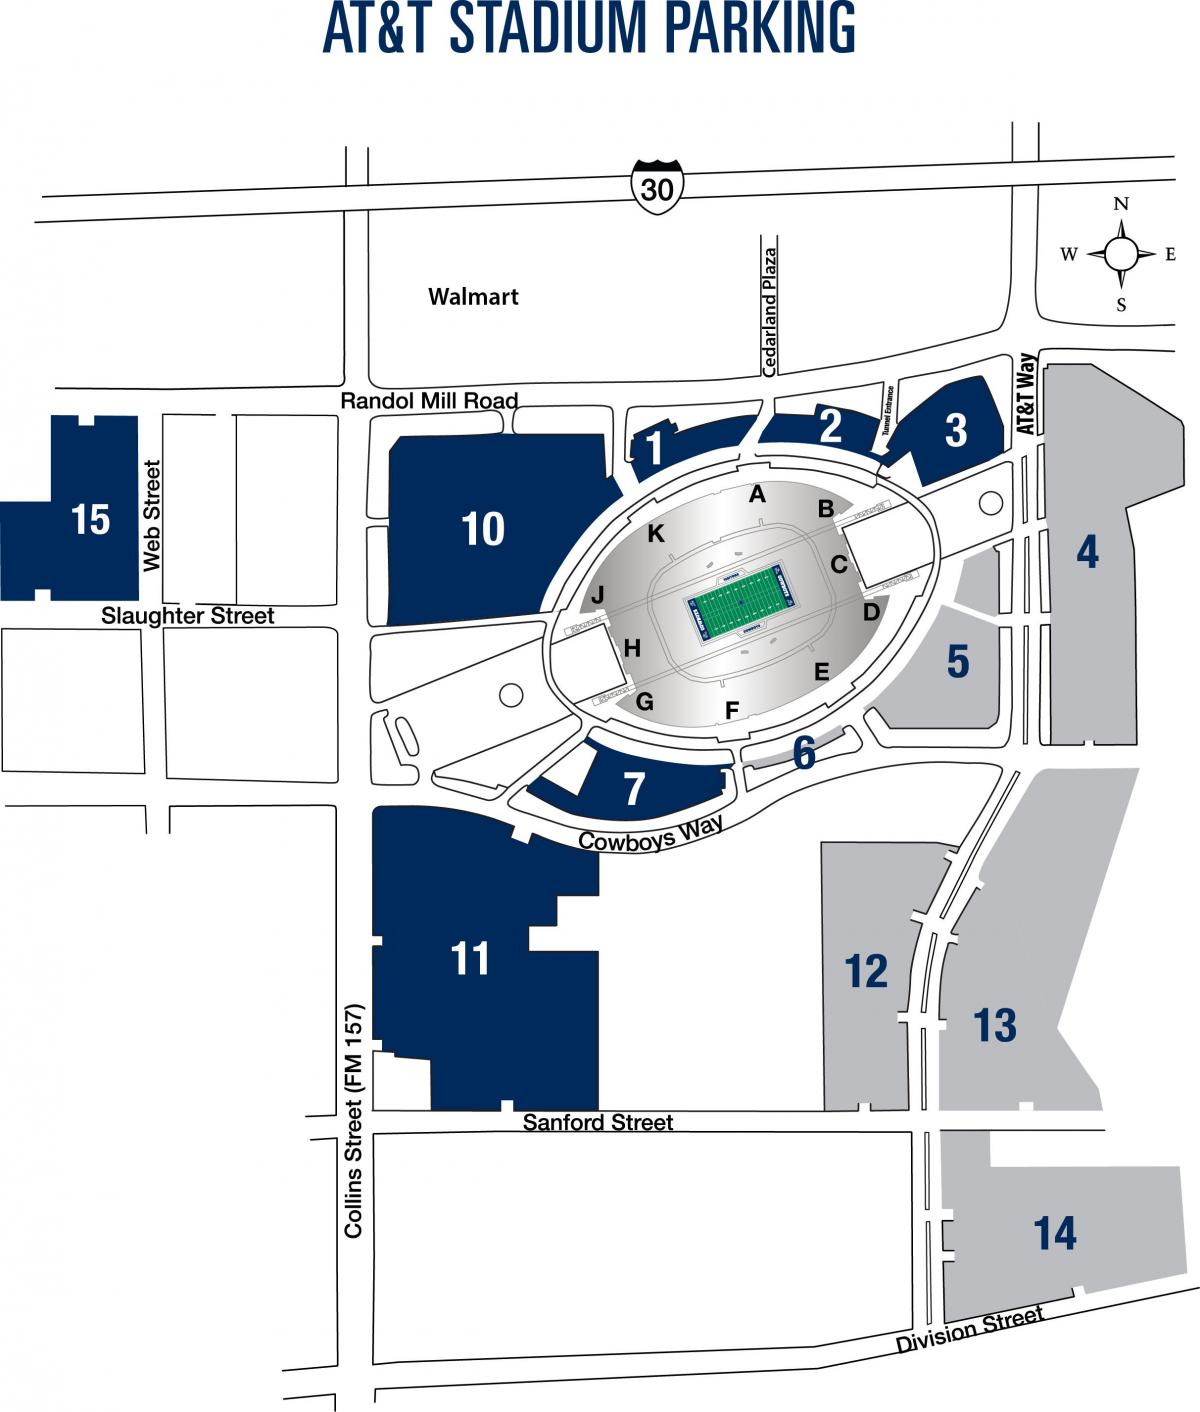 At&t stadium parking map - At&t parking map (California - USA)